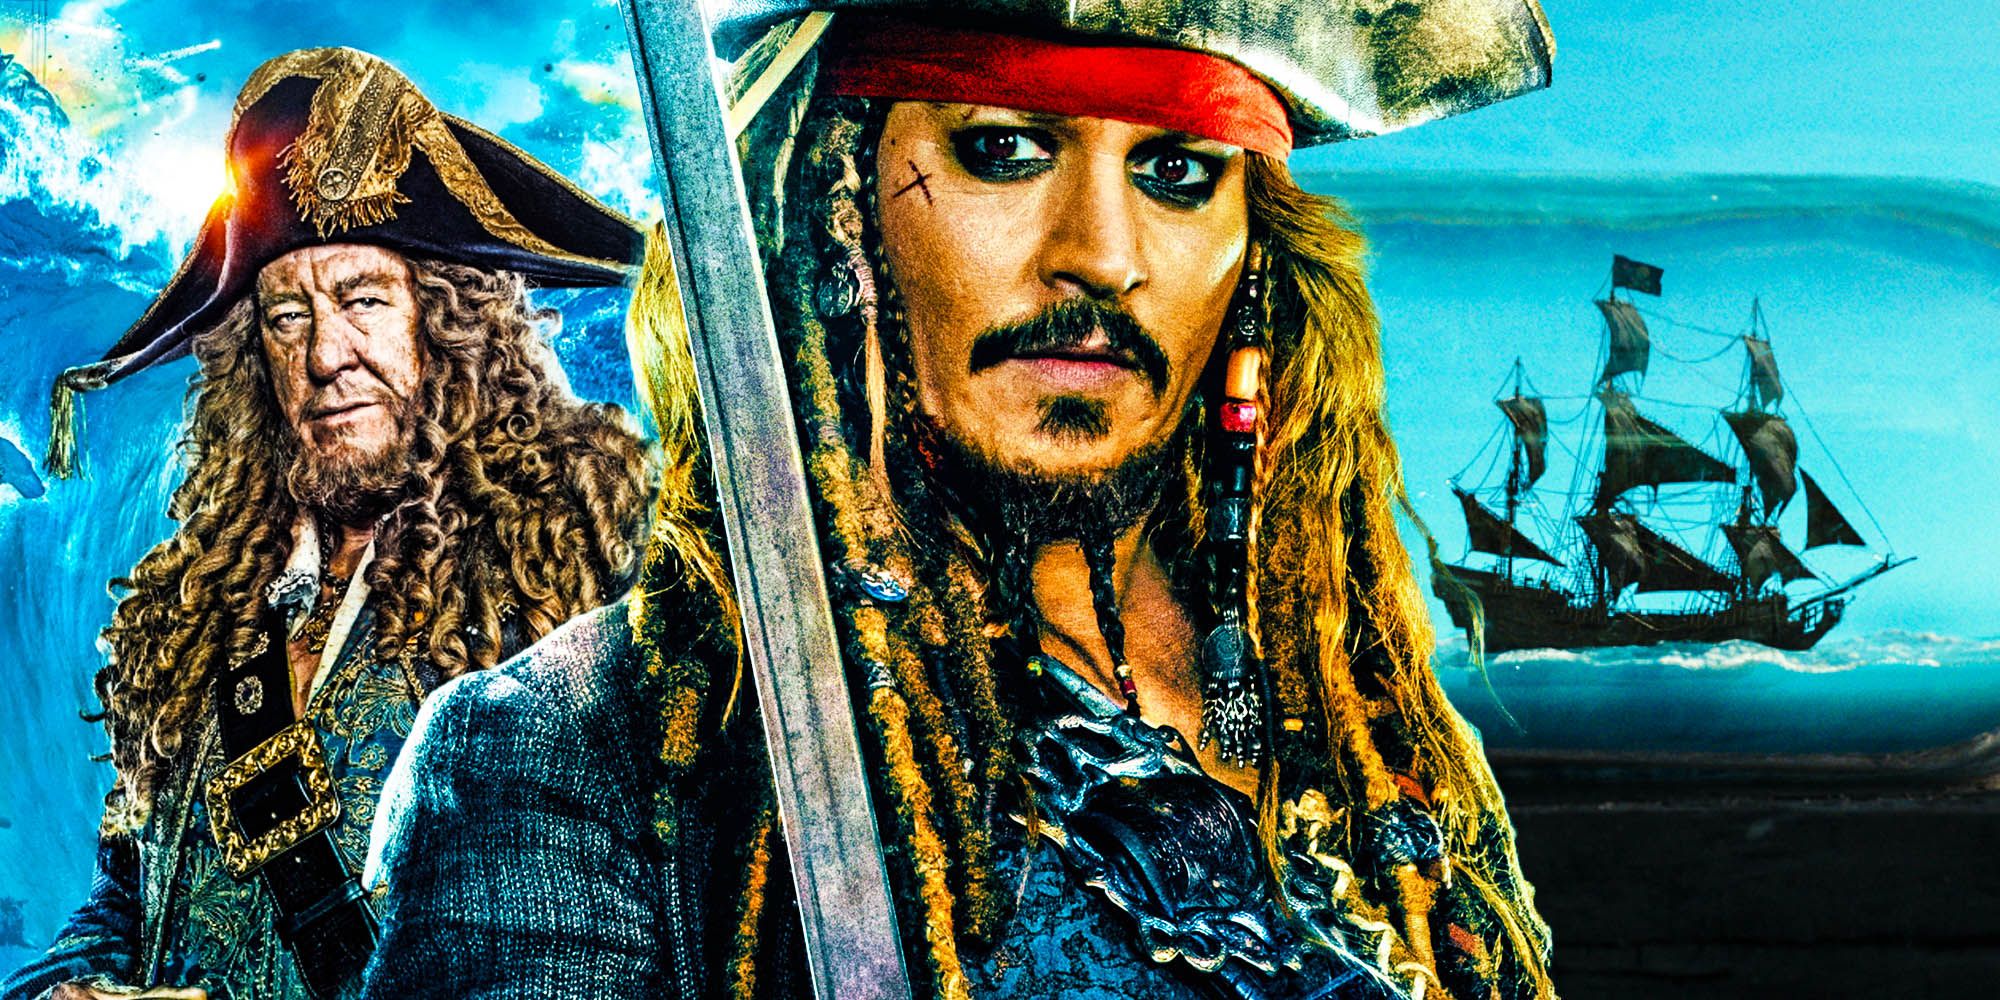 Original Pirates 5 Script Ruined Jack Sparrow & Barbossas History